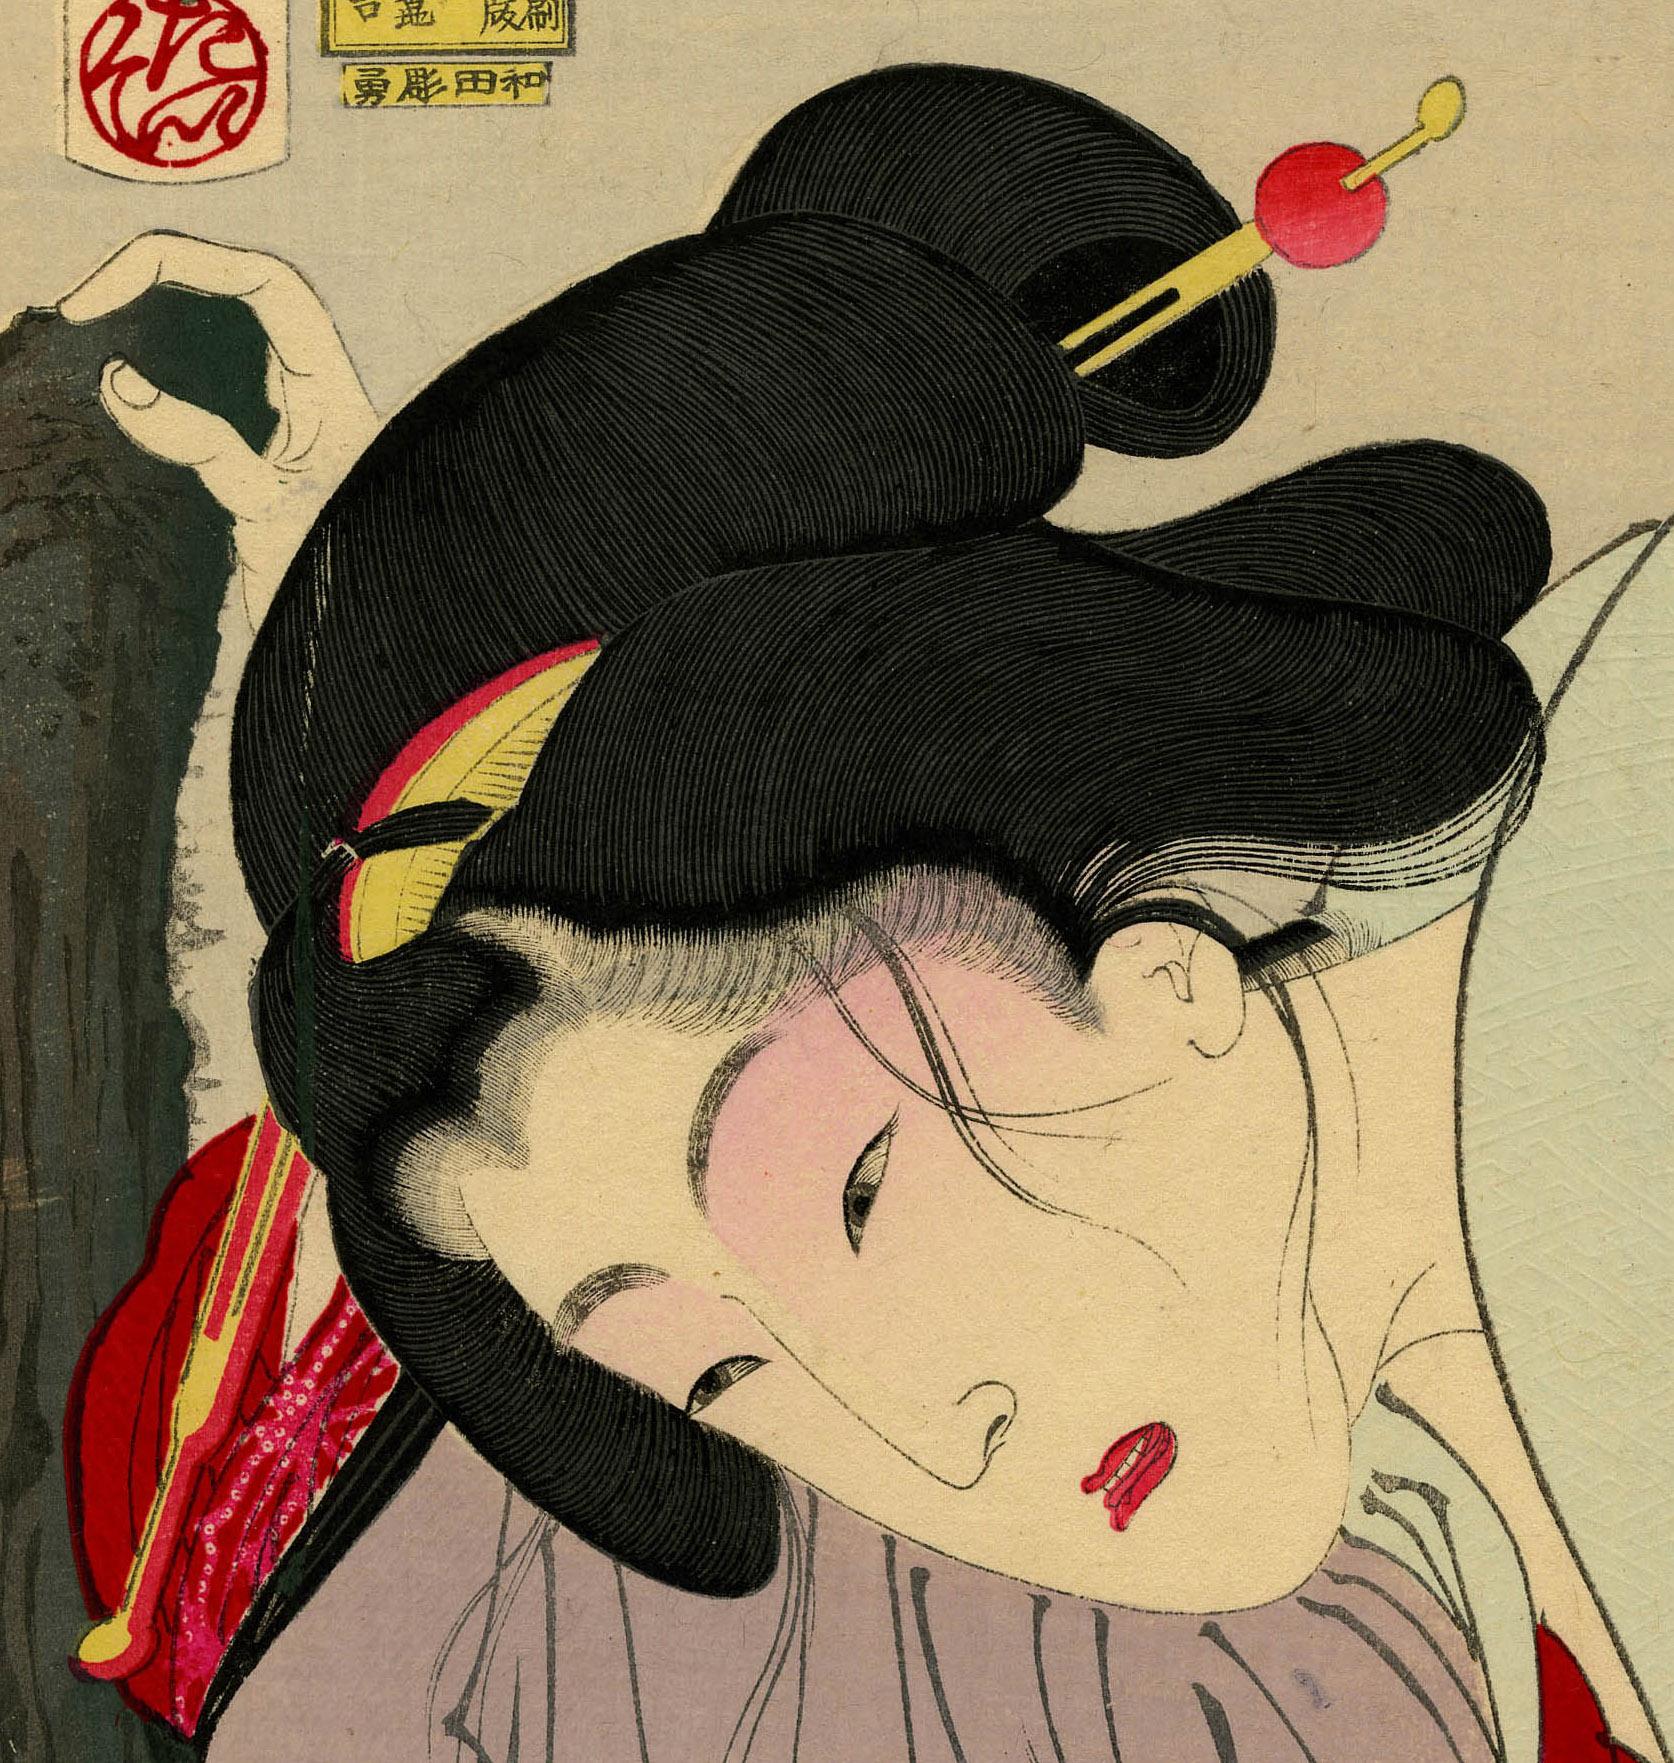 Dangerous: The Appearance of a Contemporary Geisha of the Meiji Era - Print by Taiso Yoshitoshi